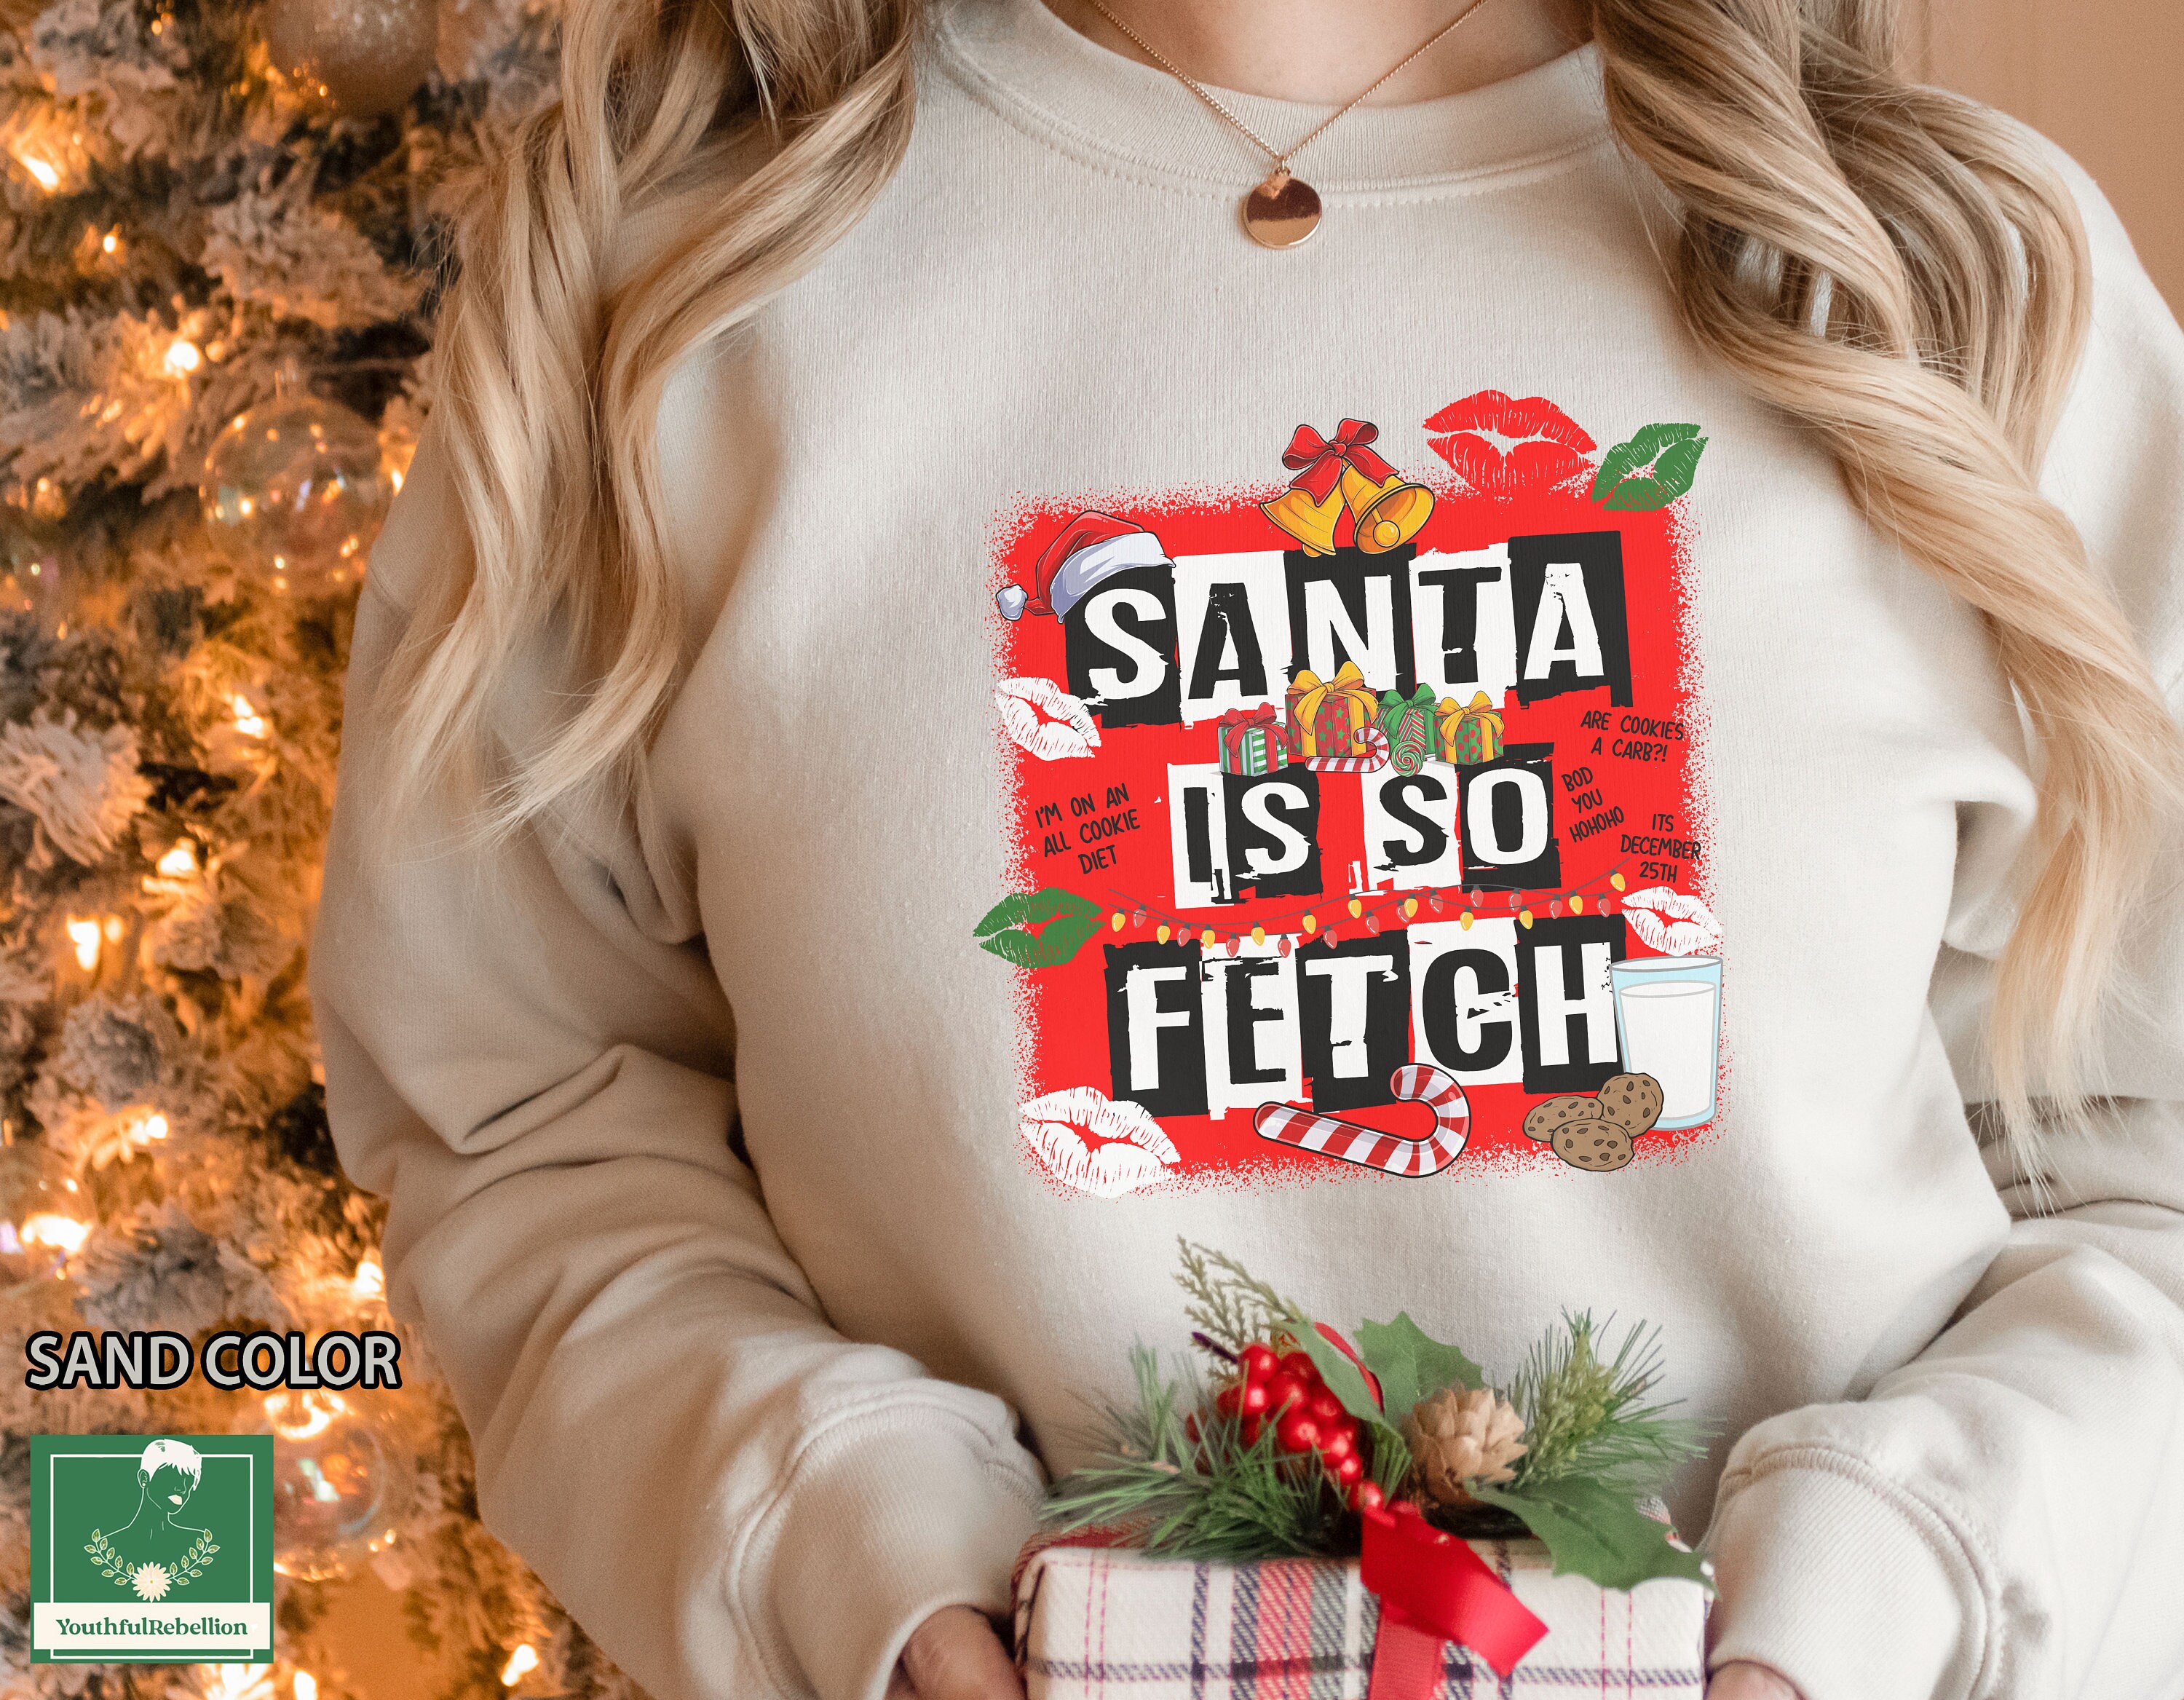 Mean Girls Jingle Bell Rock Sweater, Fetchmas Sweater for Christmas, Funny  Christmas Sweater, Y2k Humor Shirt, Thats so Fetch Crewneck 